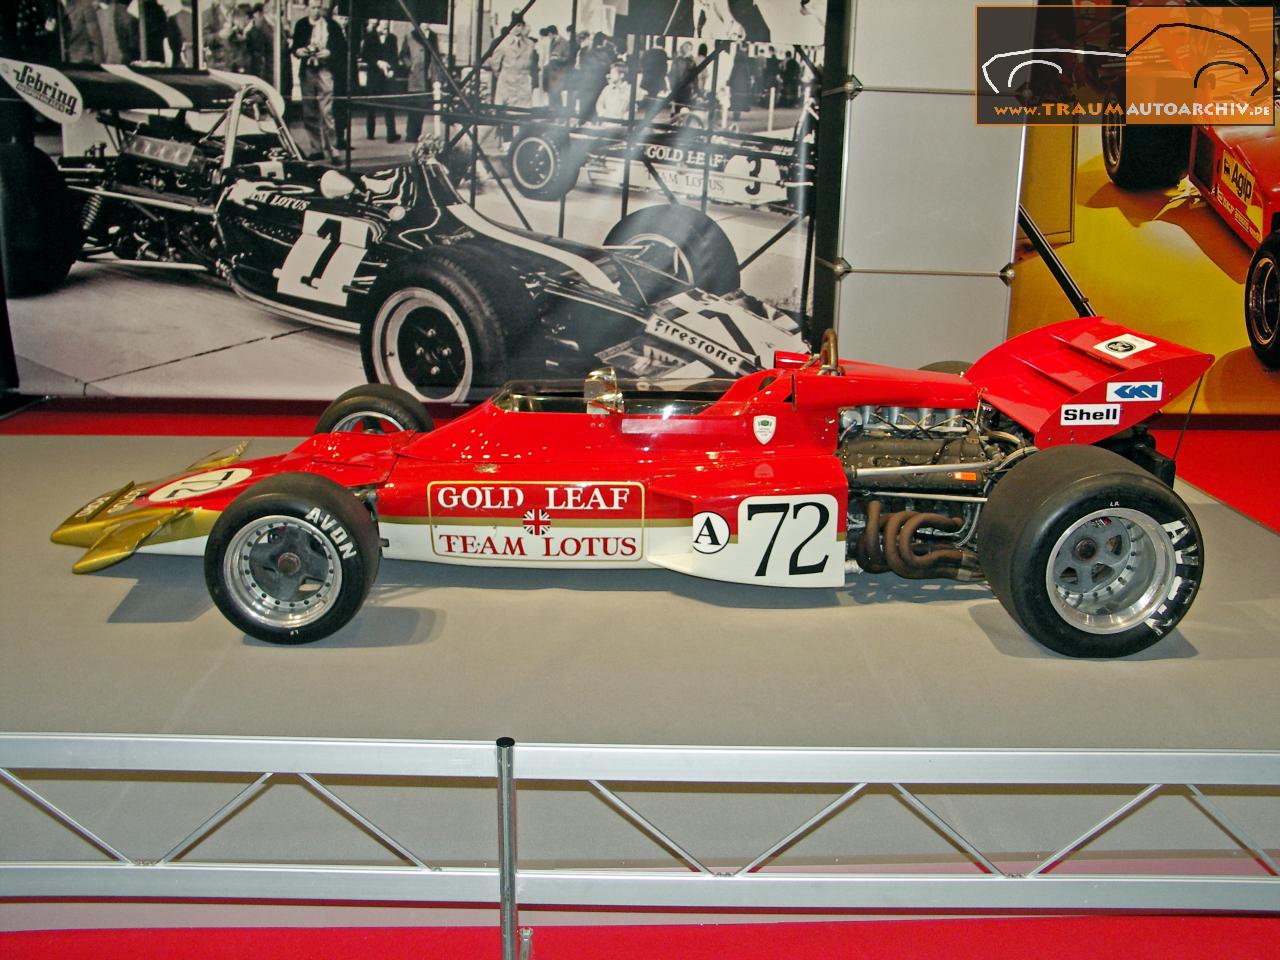 F1_Lotus-Ford 72 '1970.jpg 181.4K